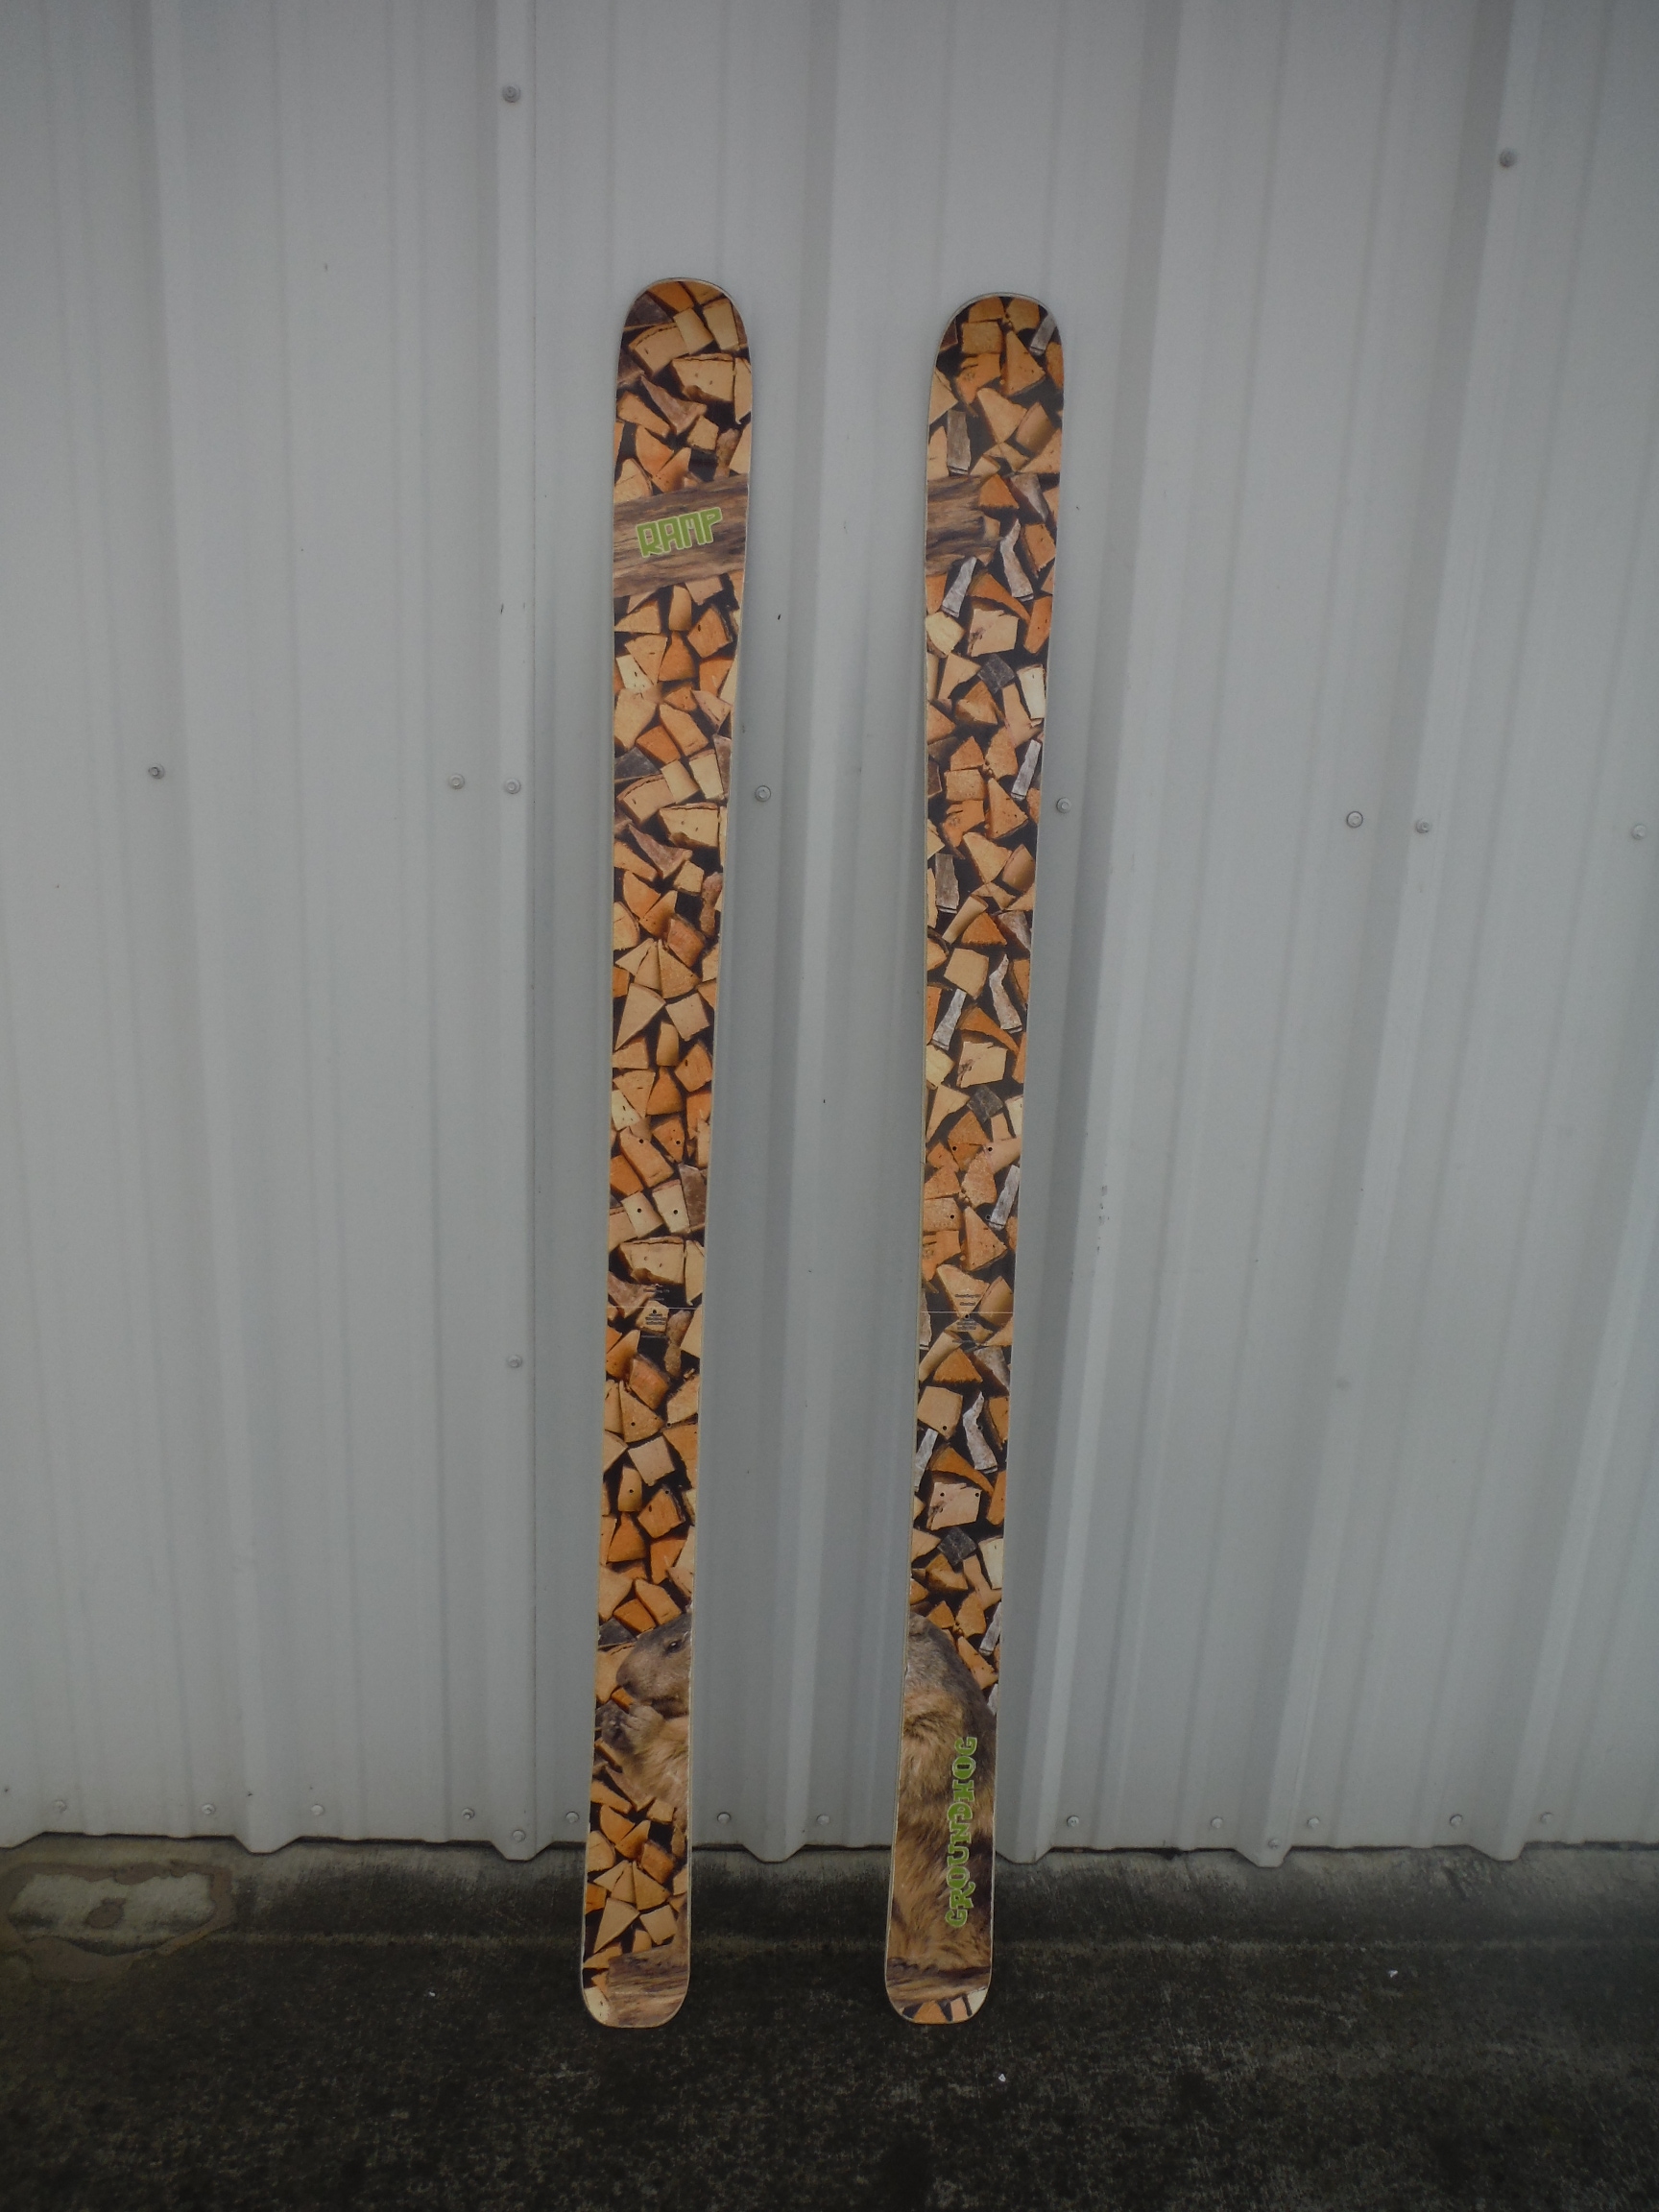 Used 179 cm GROUNDHOG Skis Without Bindings